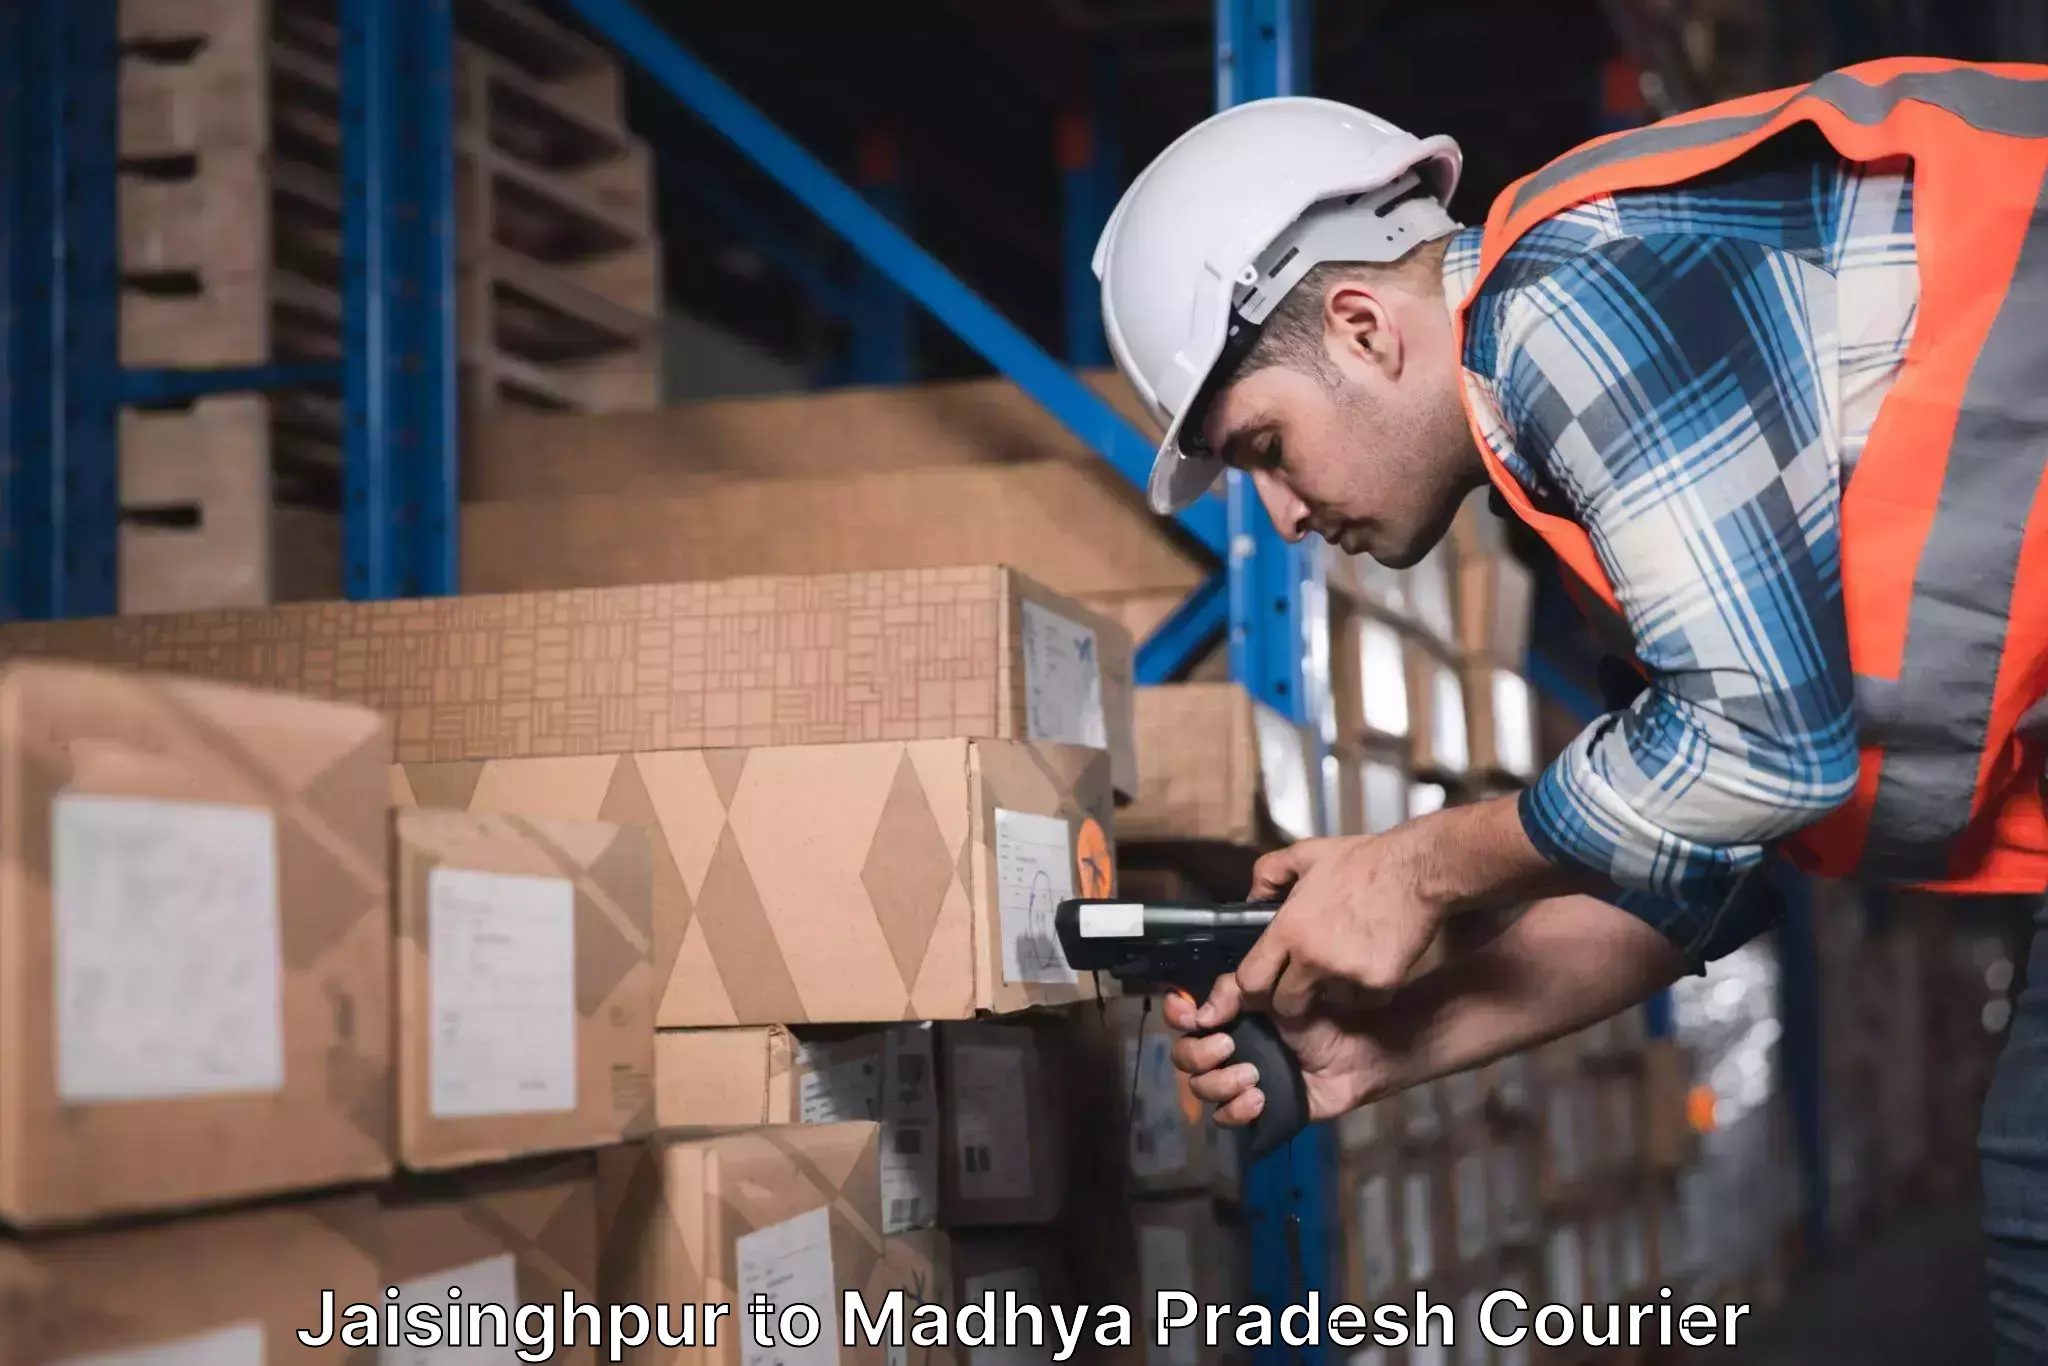 Ground shipping in Jaisinghpur to Pawai